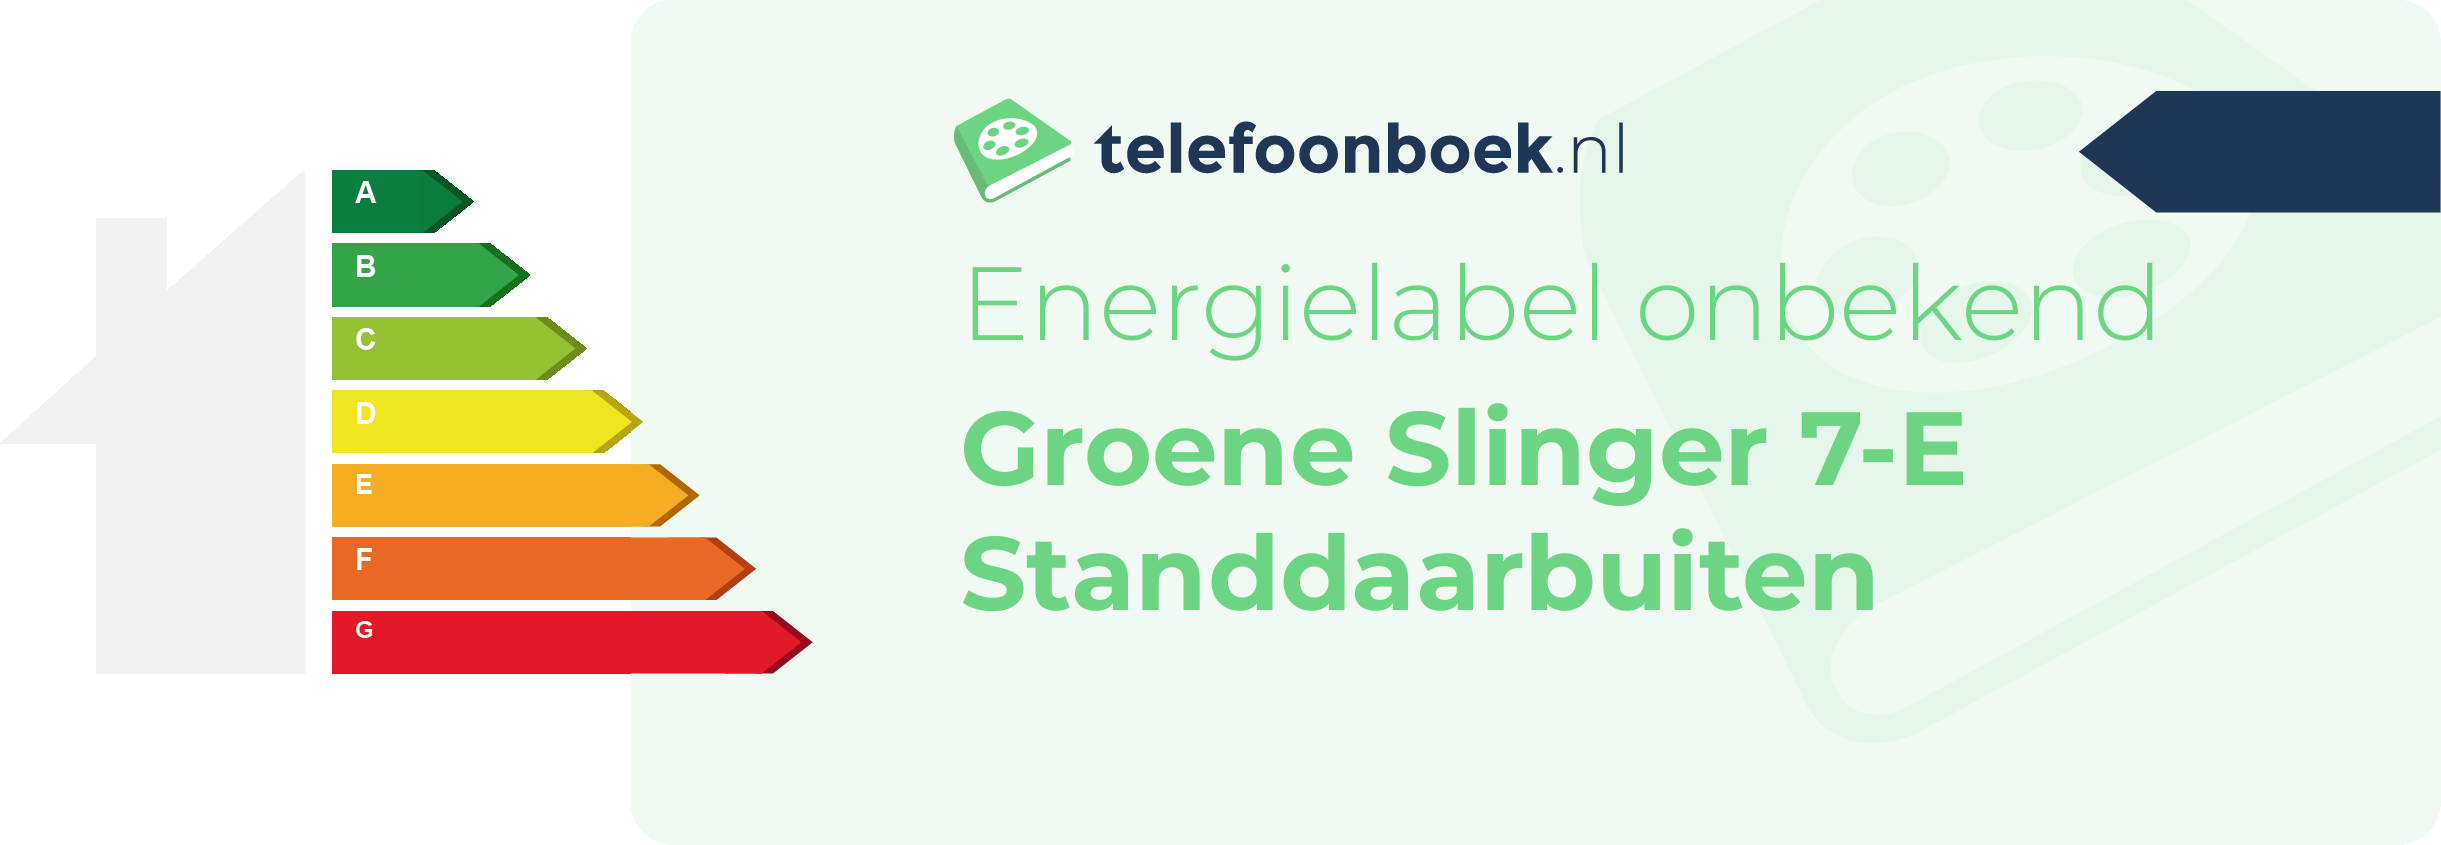 Energielabel Groene Slinger 7-E Standdaarbuiten